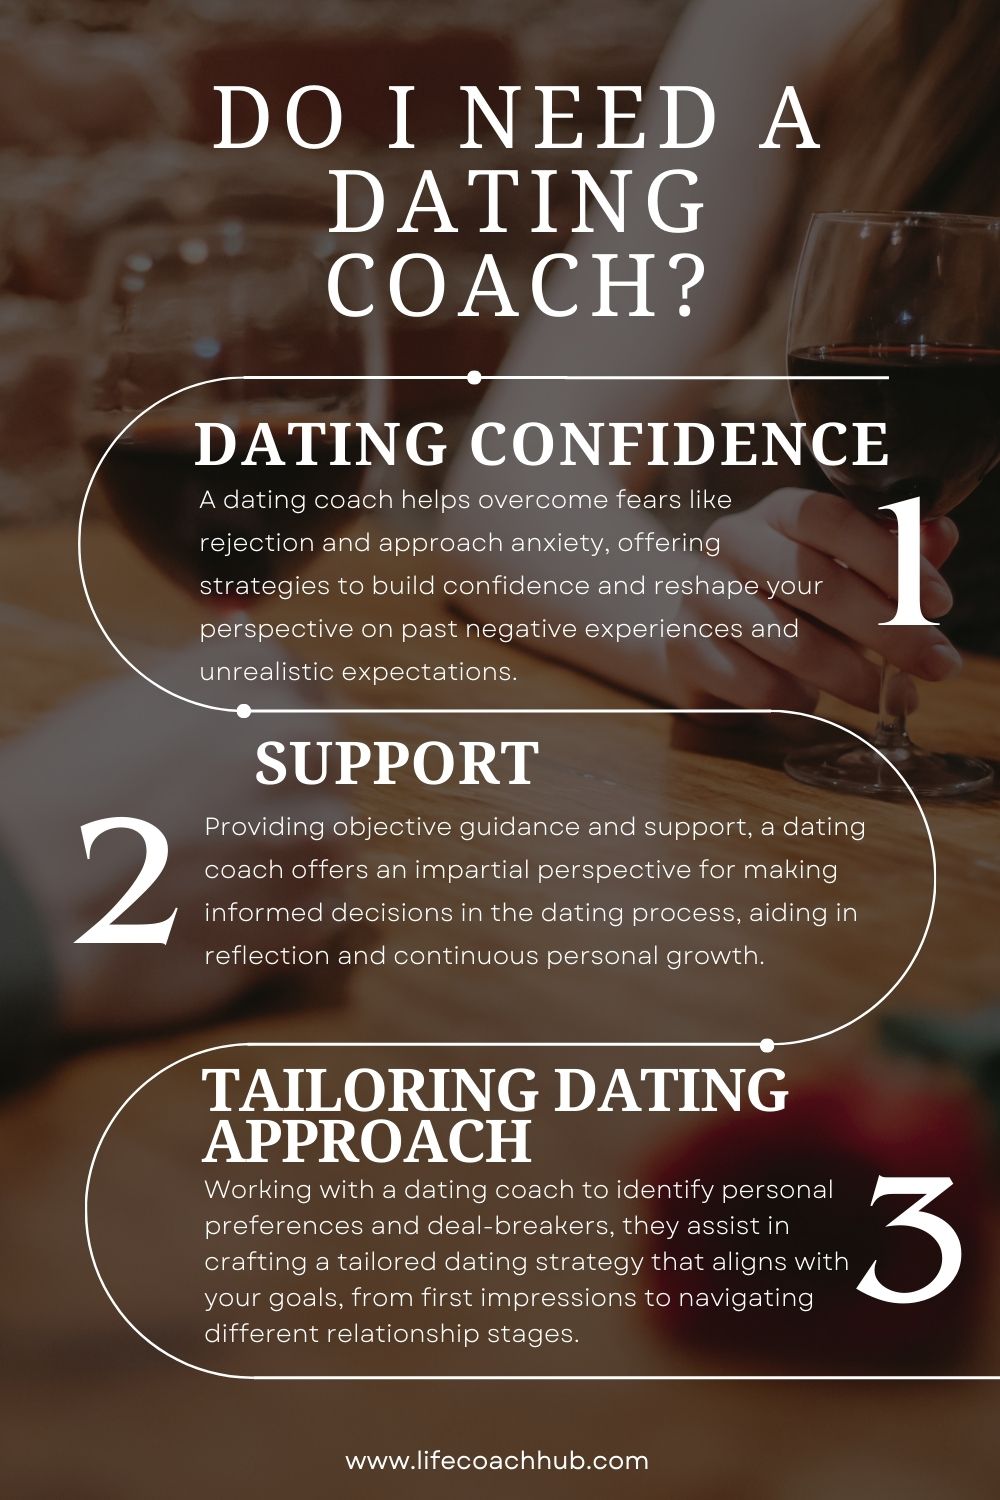 Do I need a dating coach